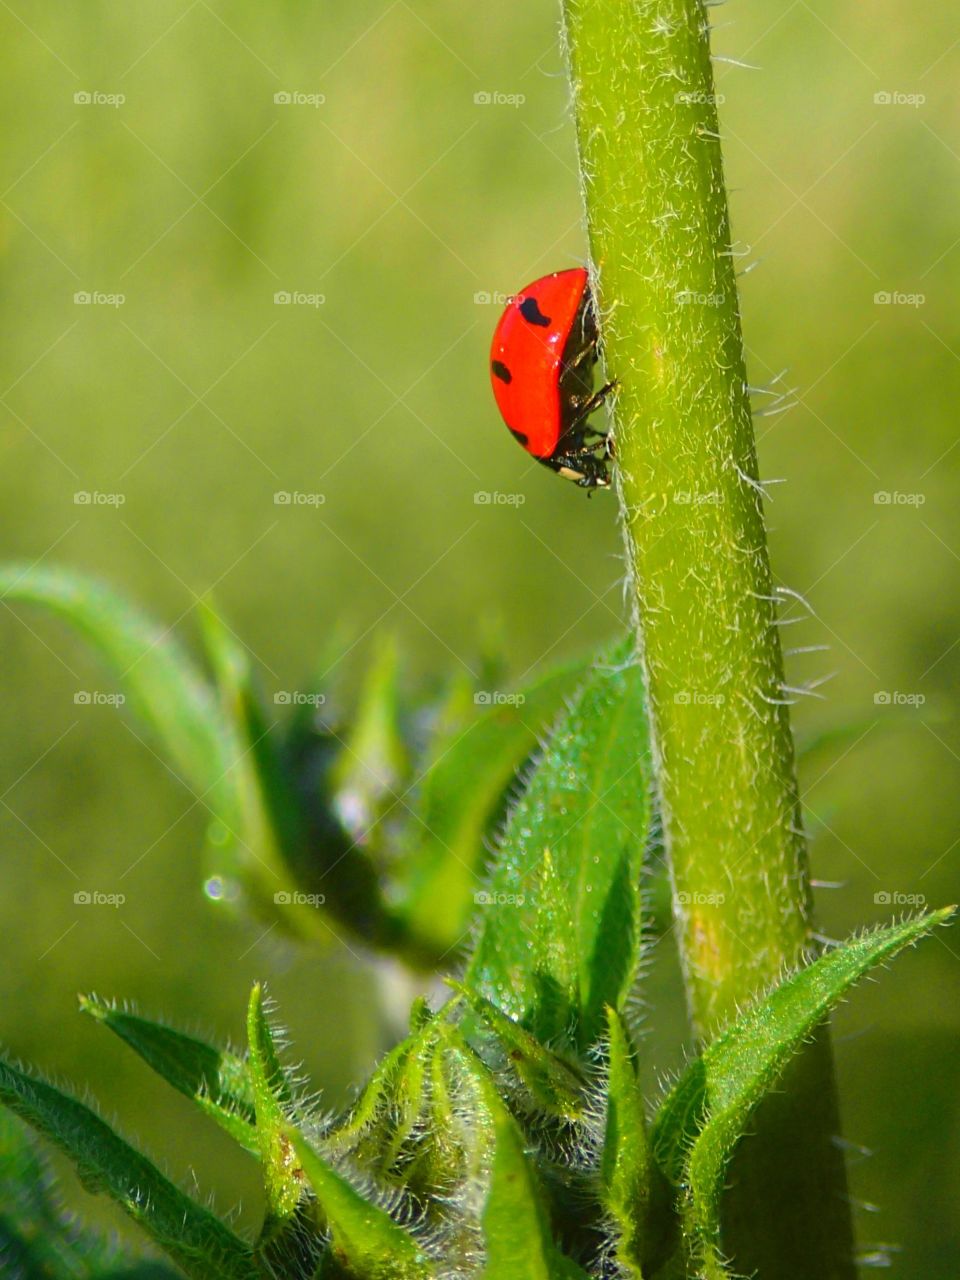 Ladybug on plants